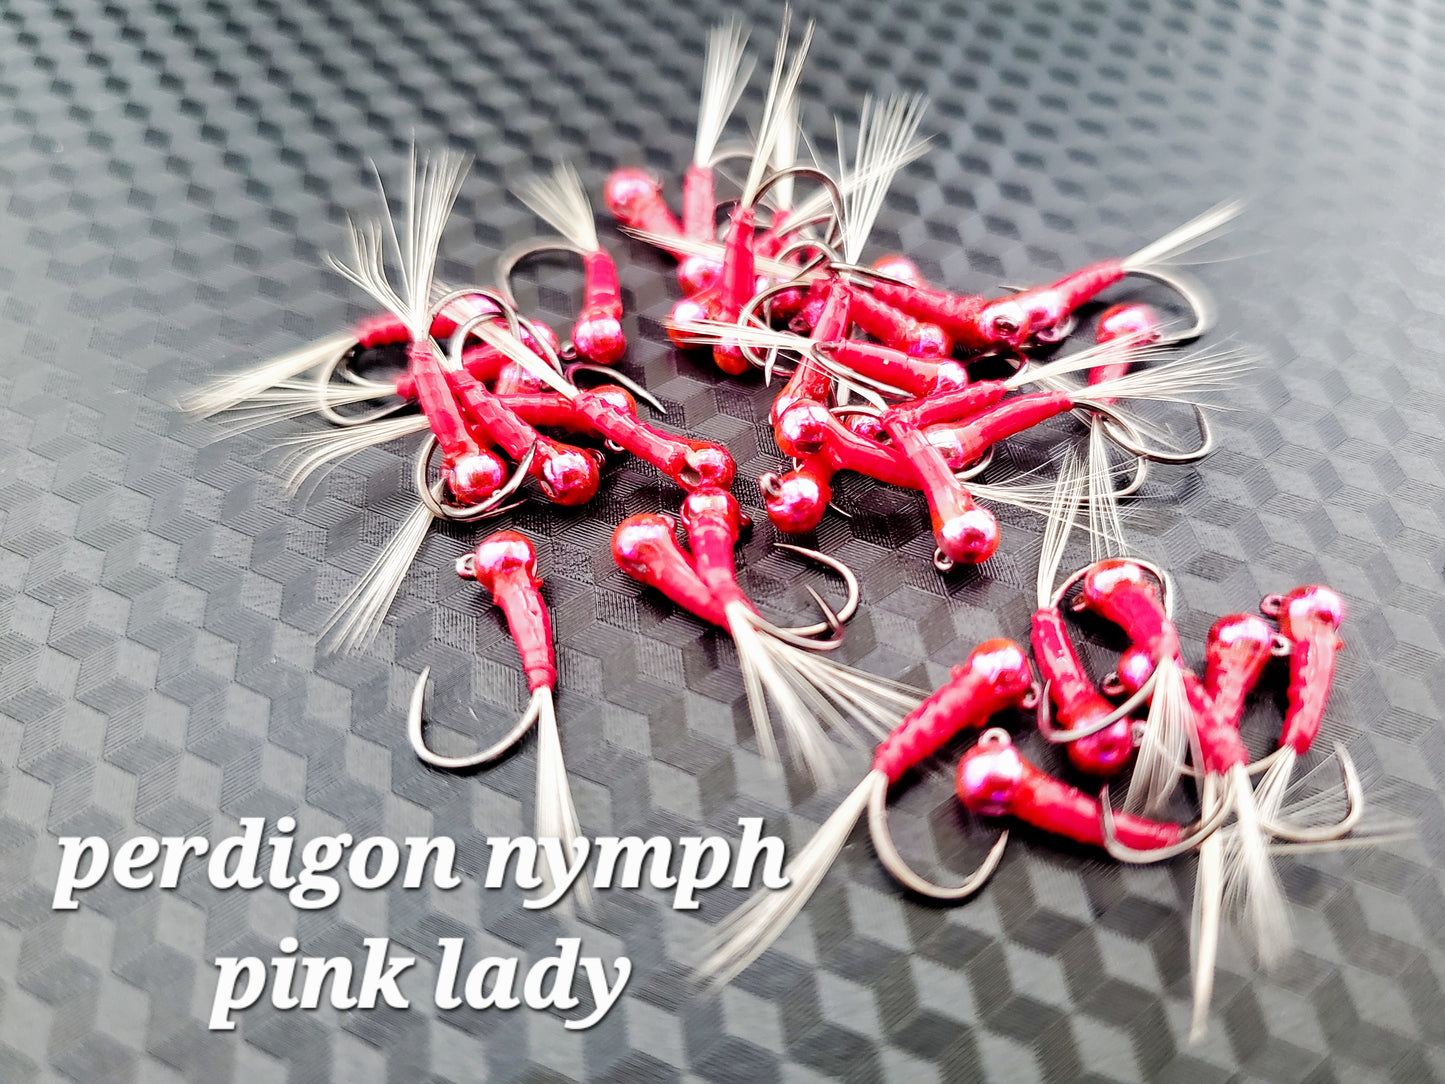 Tungsten Bead Perdigon Nymph, Tungsten Perdigon Nymph, Perdigon Nymph Pink Lady